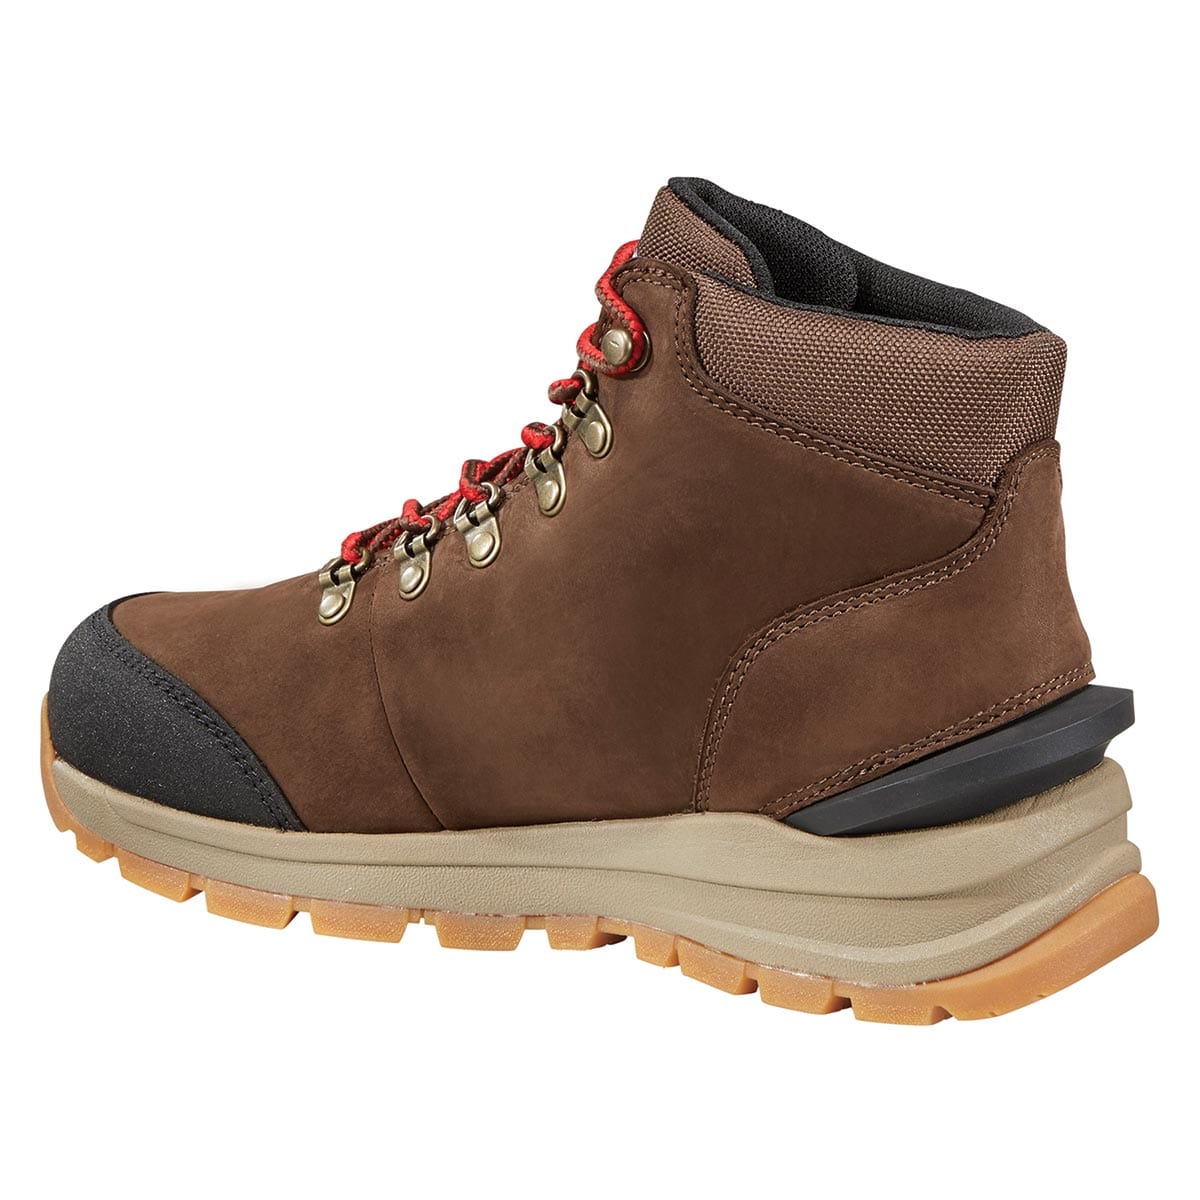 Carhartt Women's Gilmore 5" Work Hiker Boots - Dark Brown